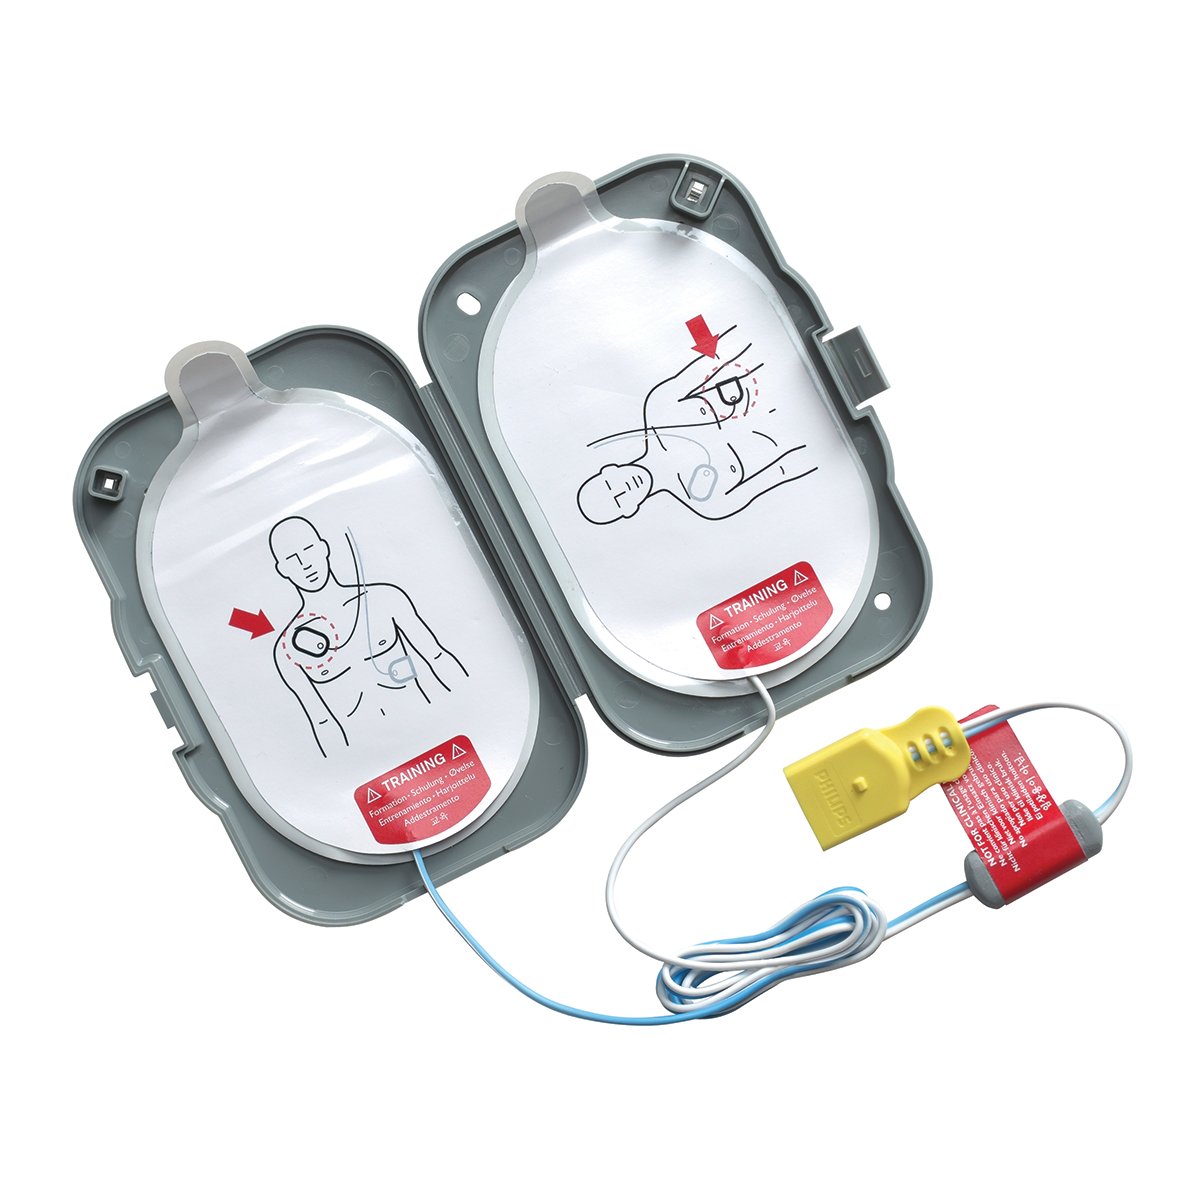 Training Electrode Pads II Cartridge for Philips Heartstart® FRx Trainer